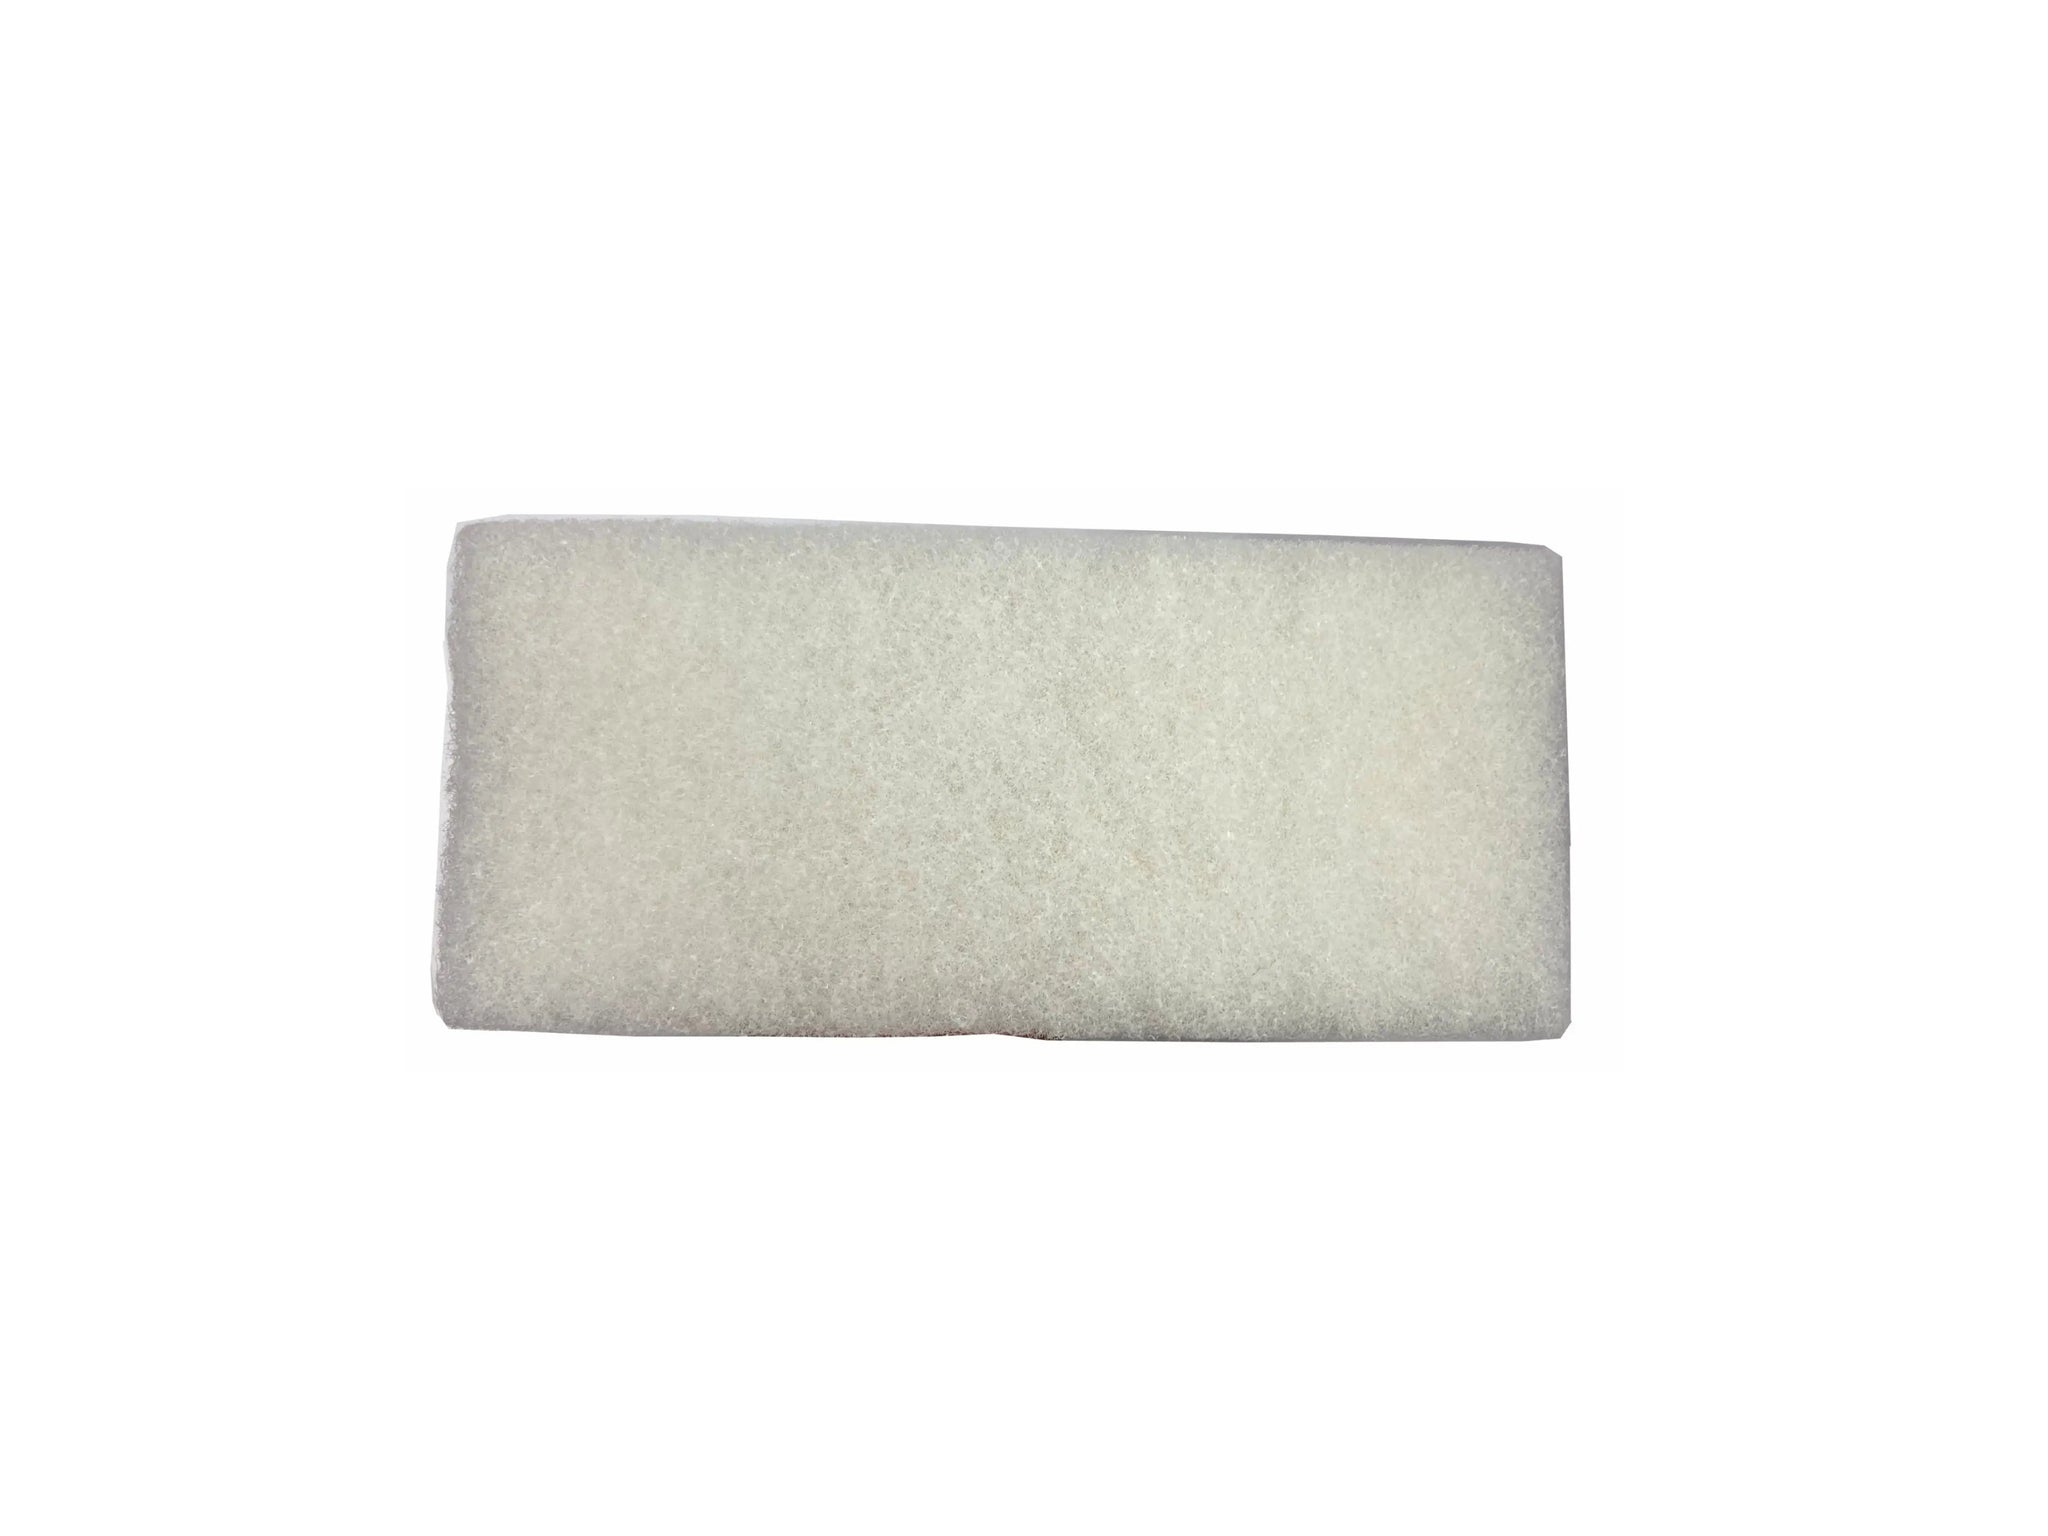 Thin White Scrub Pad 6x9